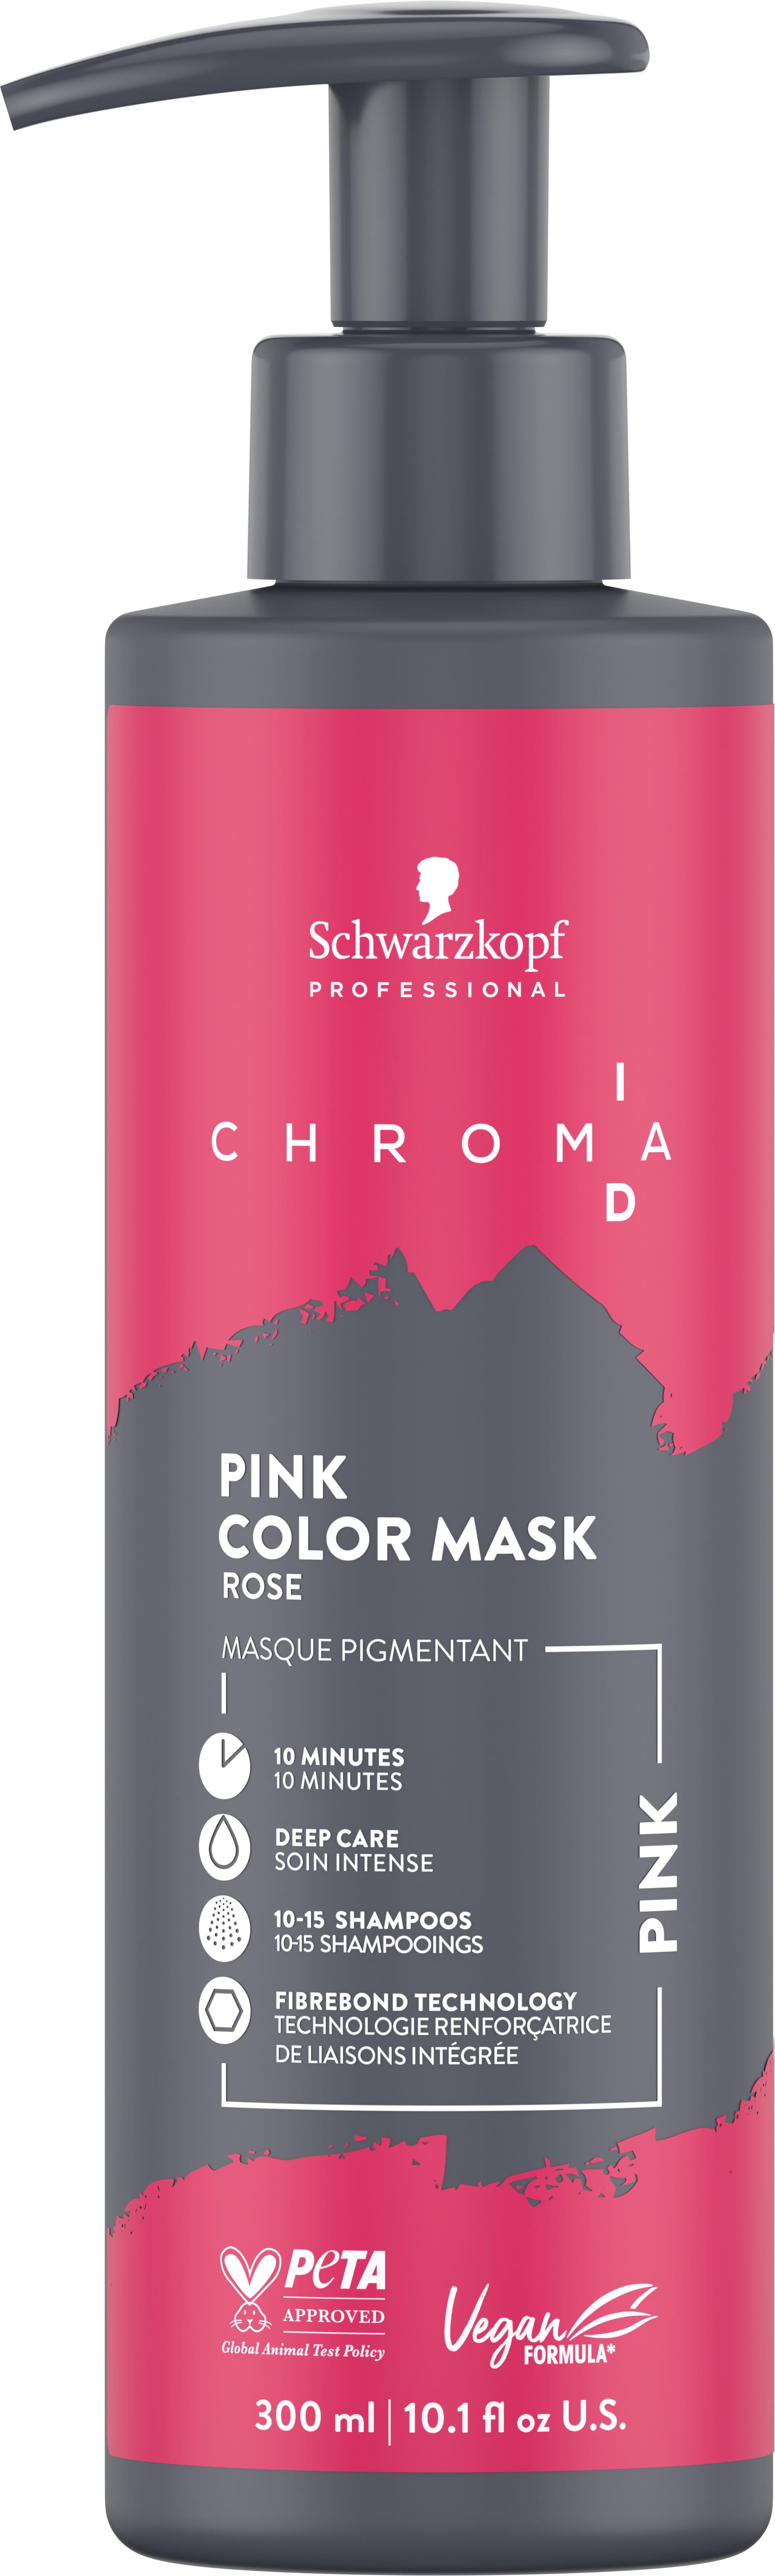 Chroma ID - Bonding Color Mask Pink